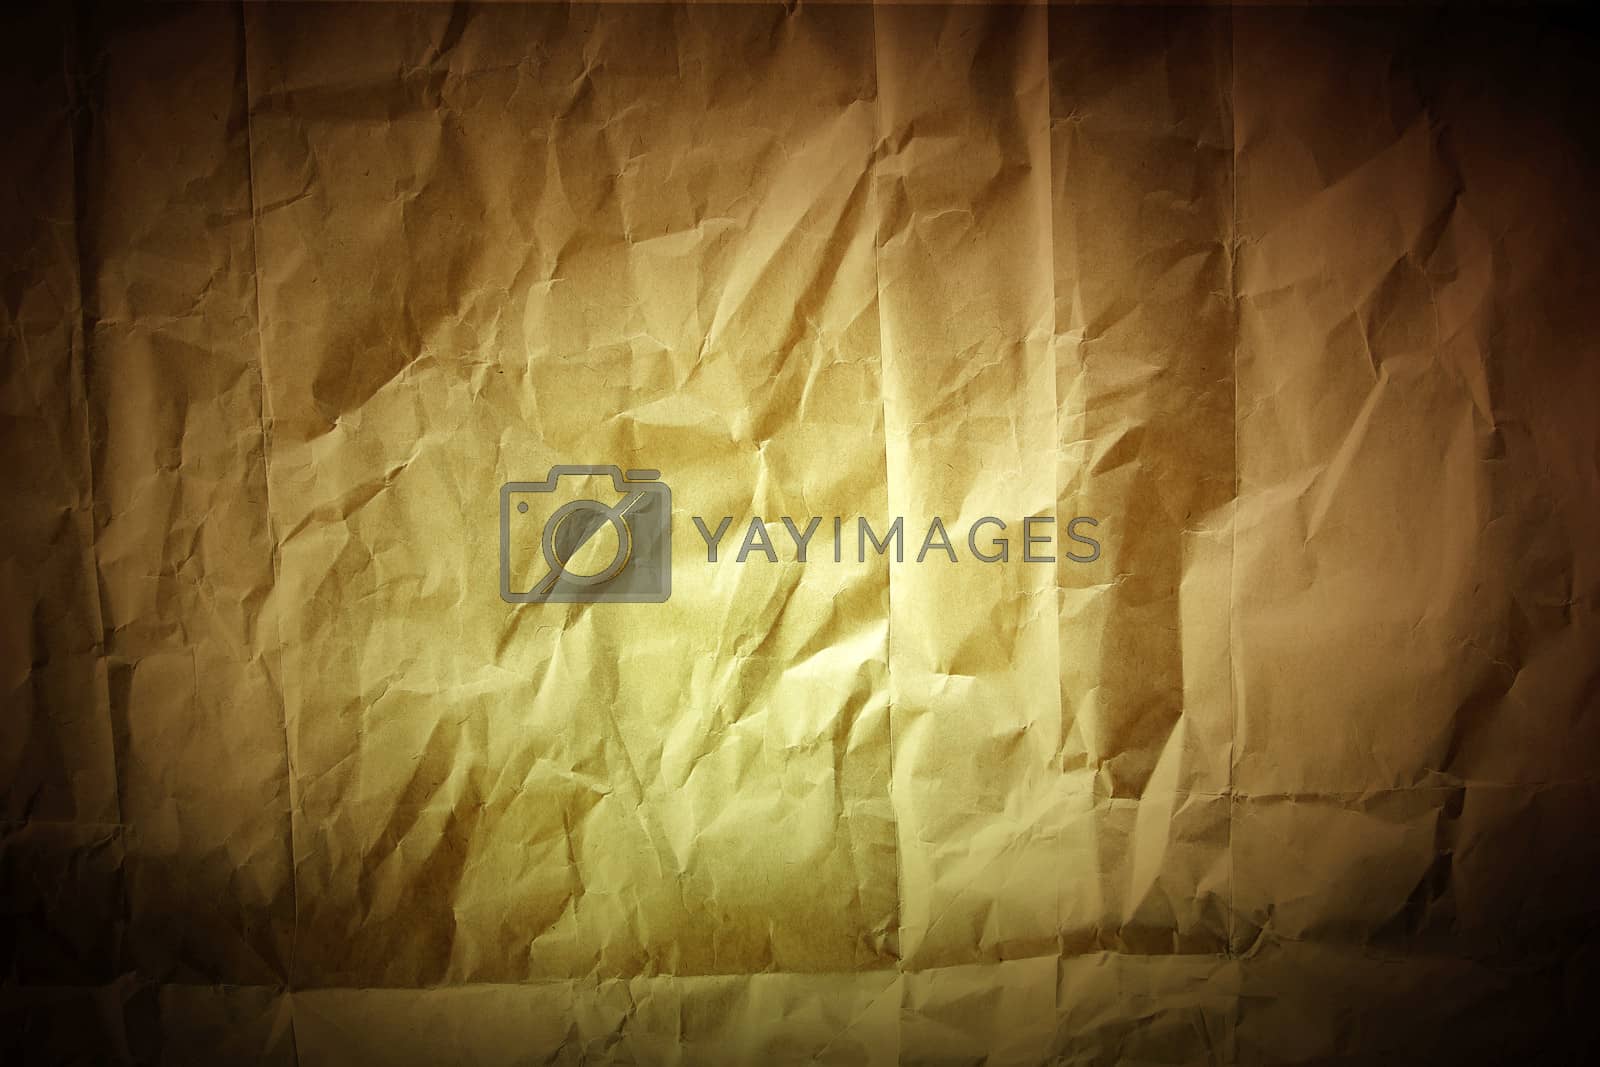 Royalty free image of Paper by Stillfx